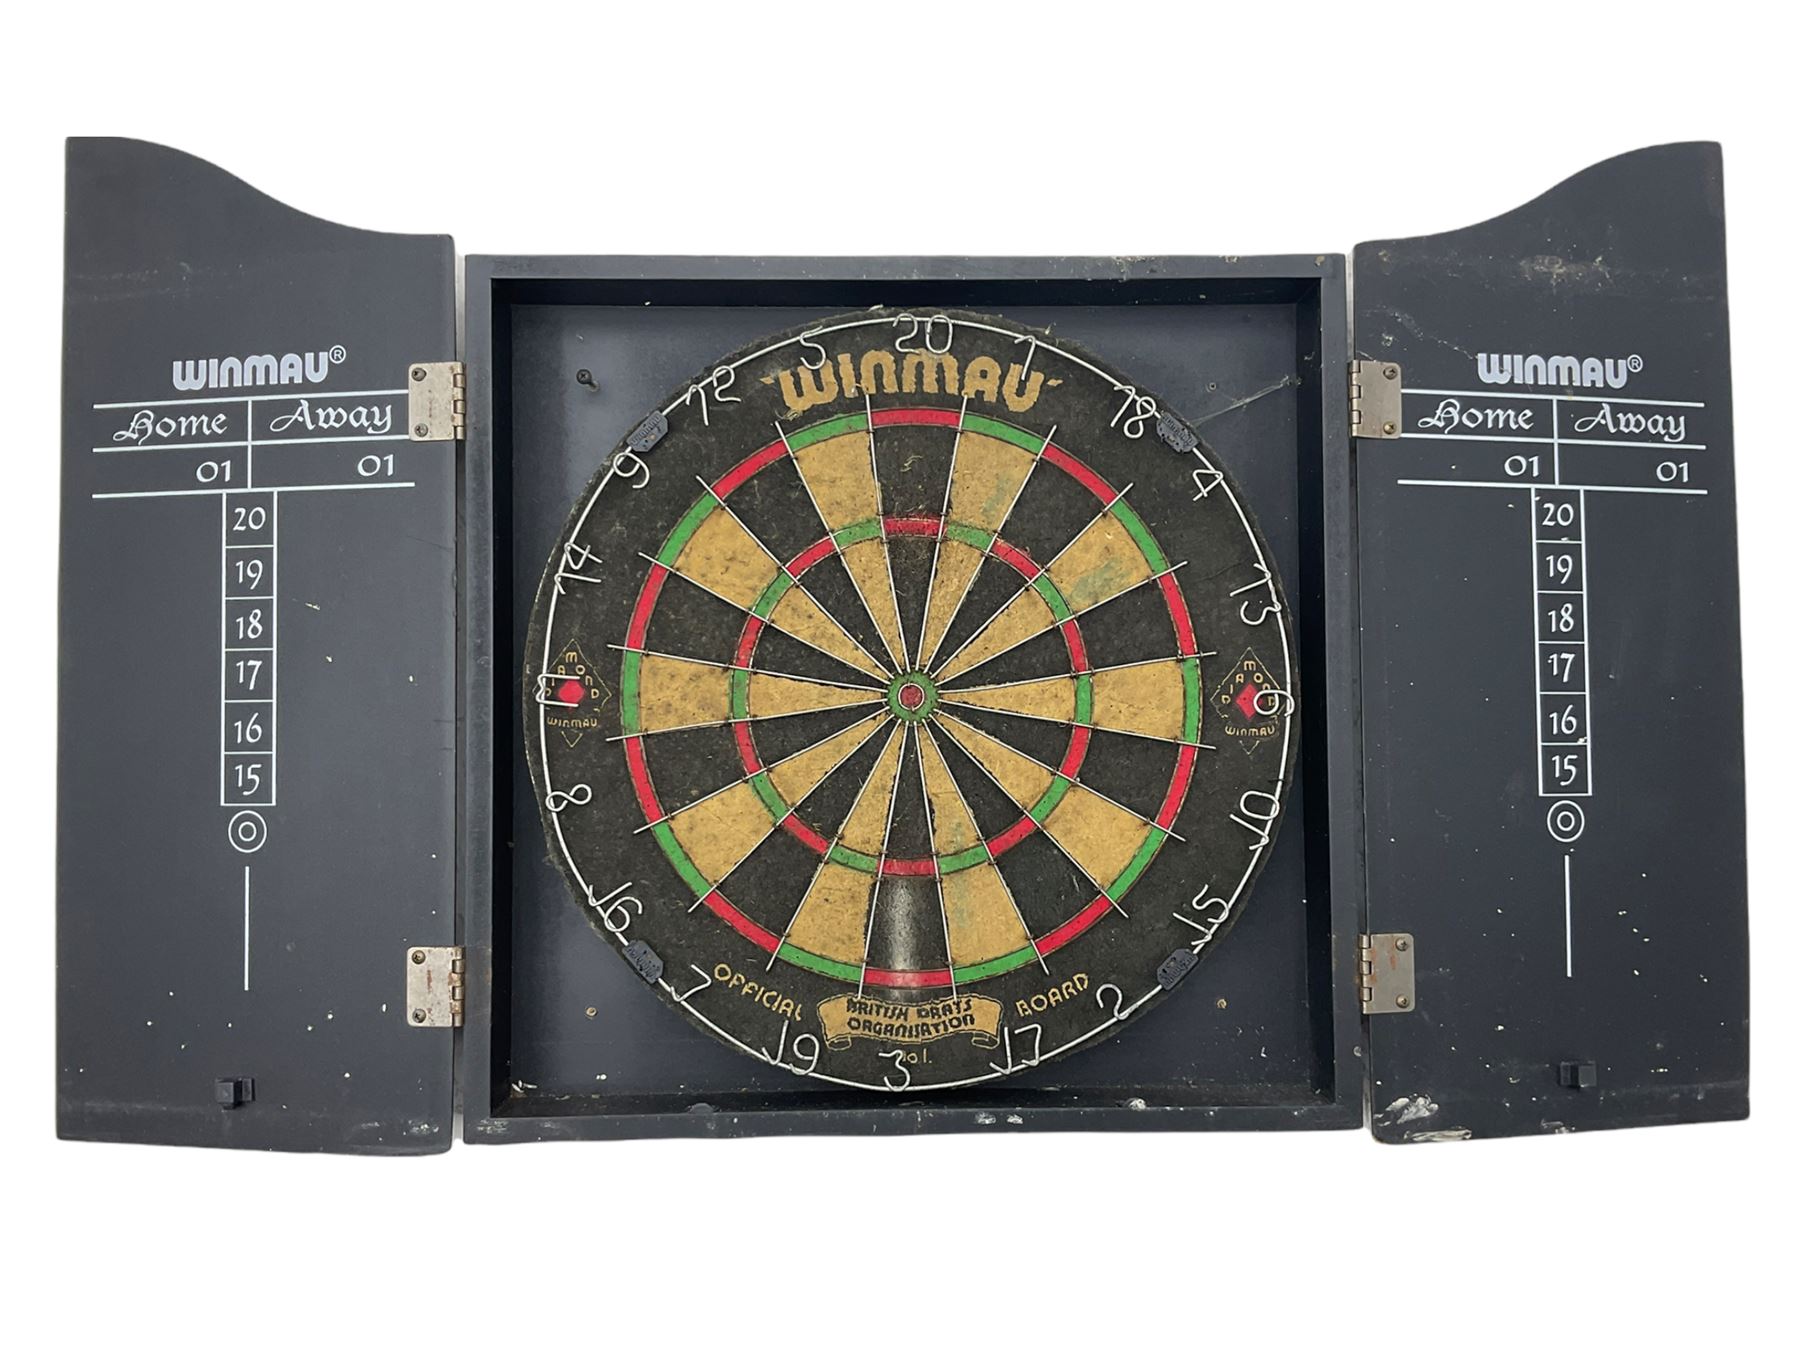 WINMAU dartboard and a snooker scoreboard - Image 2 of 4